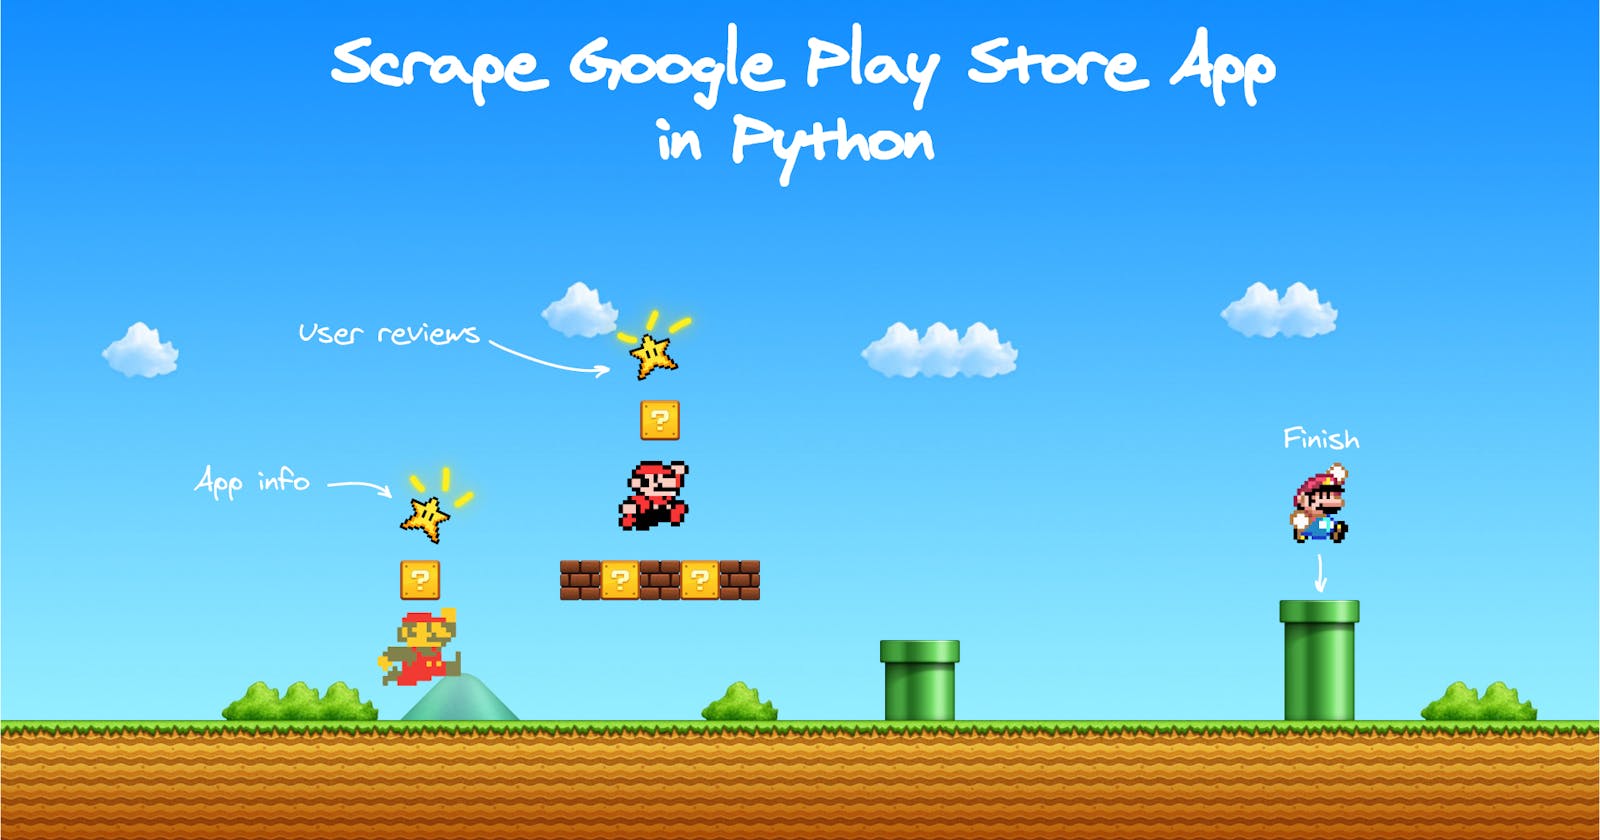 Scrape Google Play Store App in Python